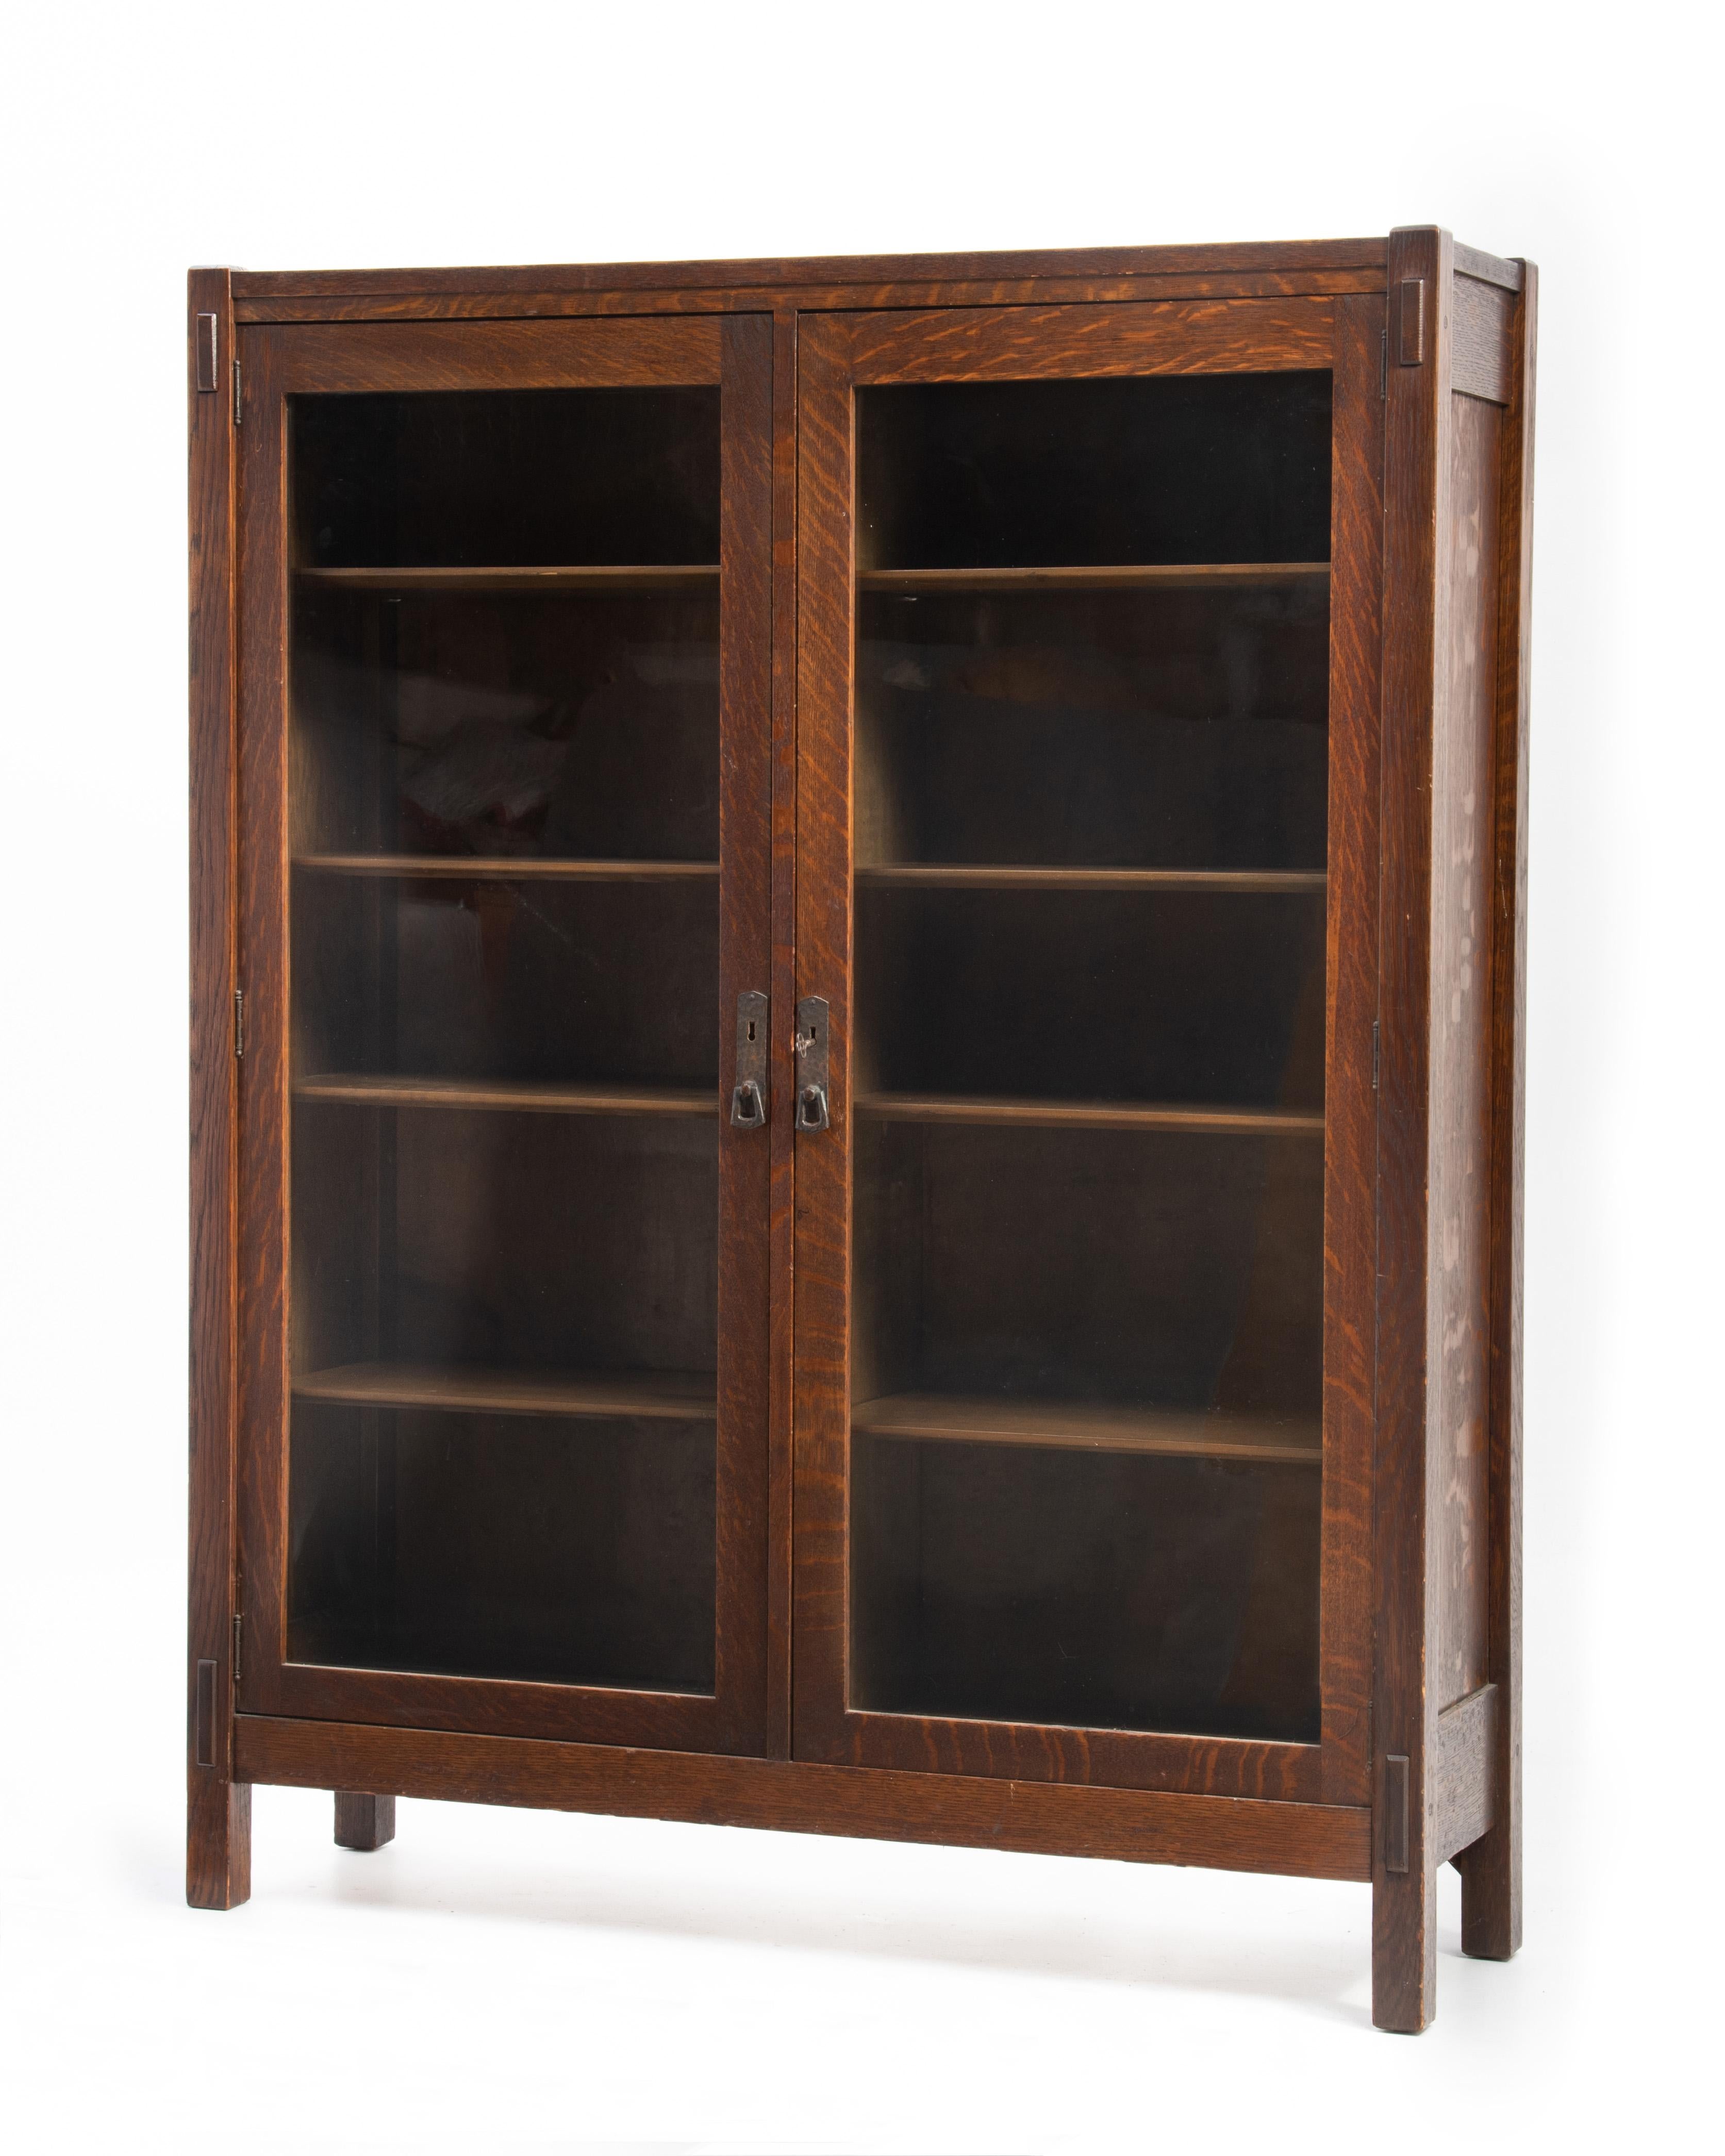 Arts and Crafts Lifetime Arts & Crafts Mission Oak Bookcase Pegged Through Tenon Original Finish For Sale